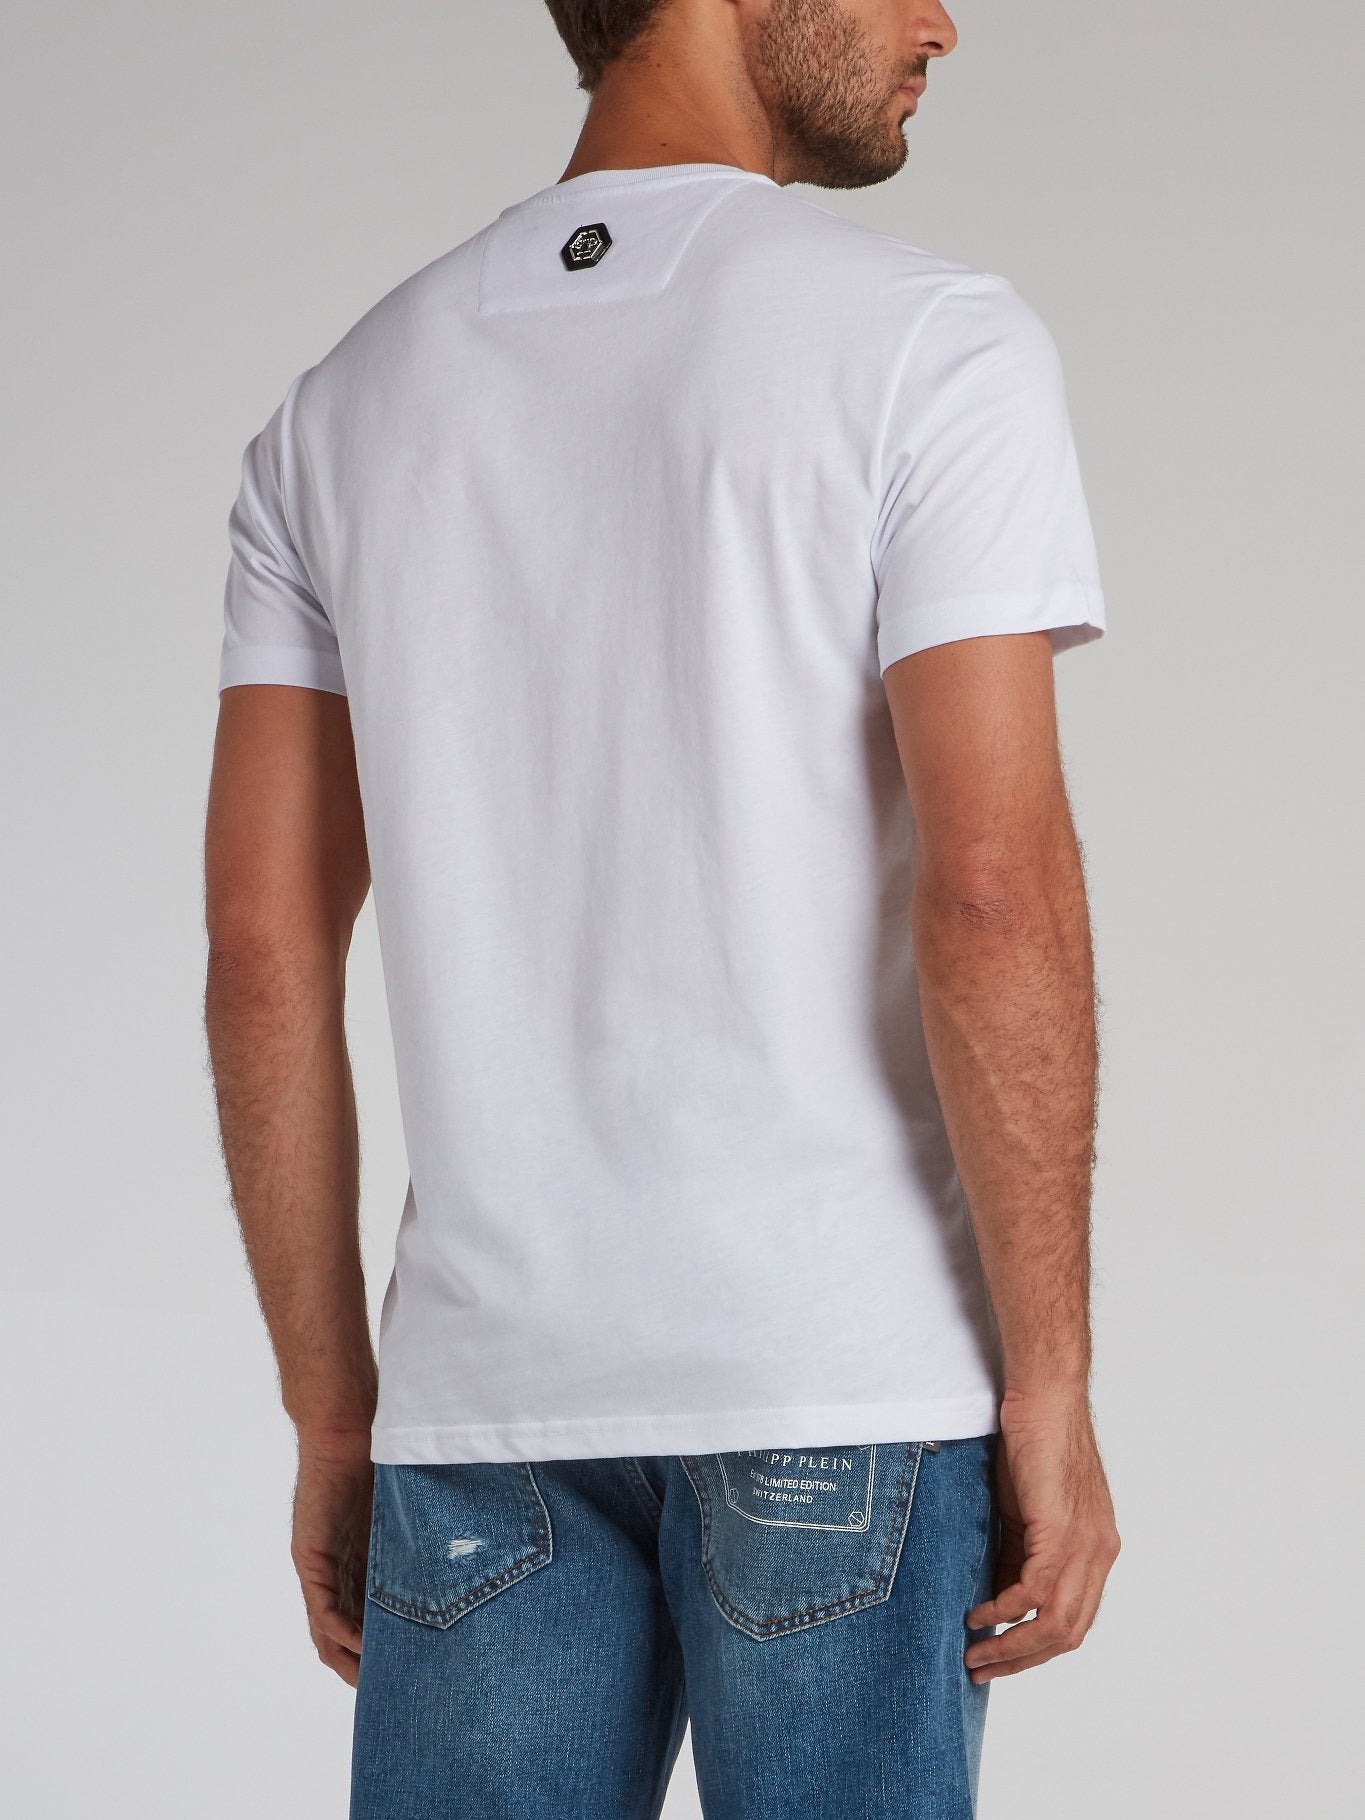 White Skull Graphic T-Shirt